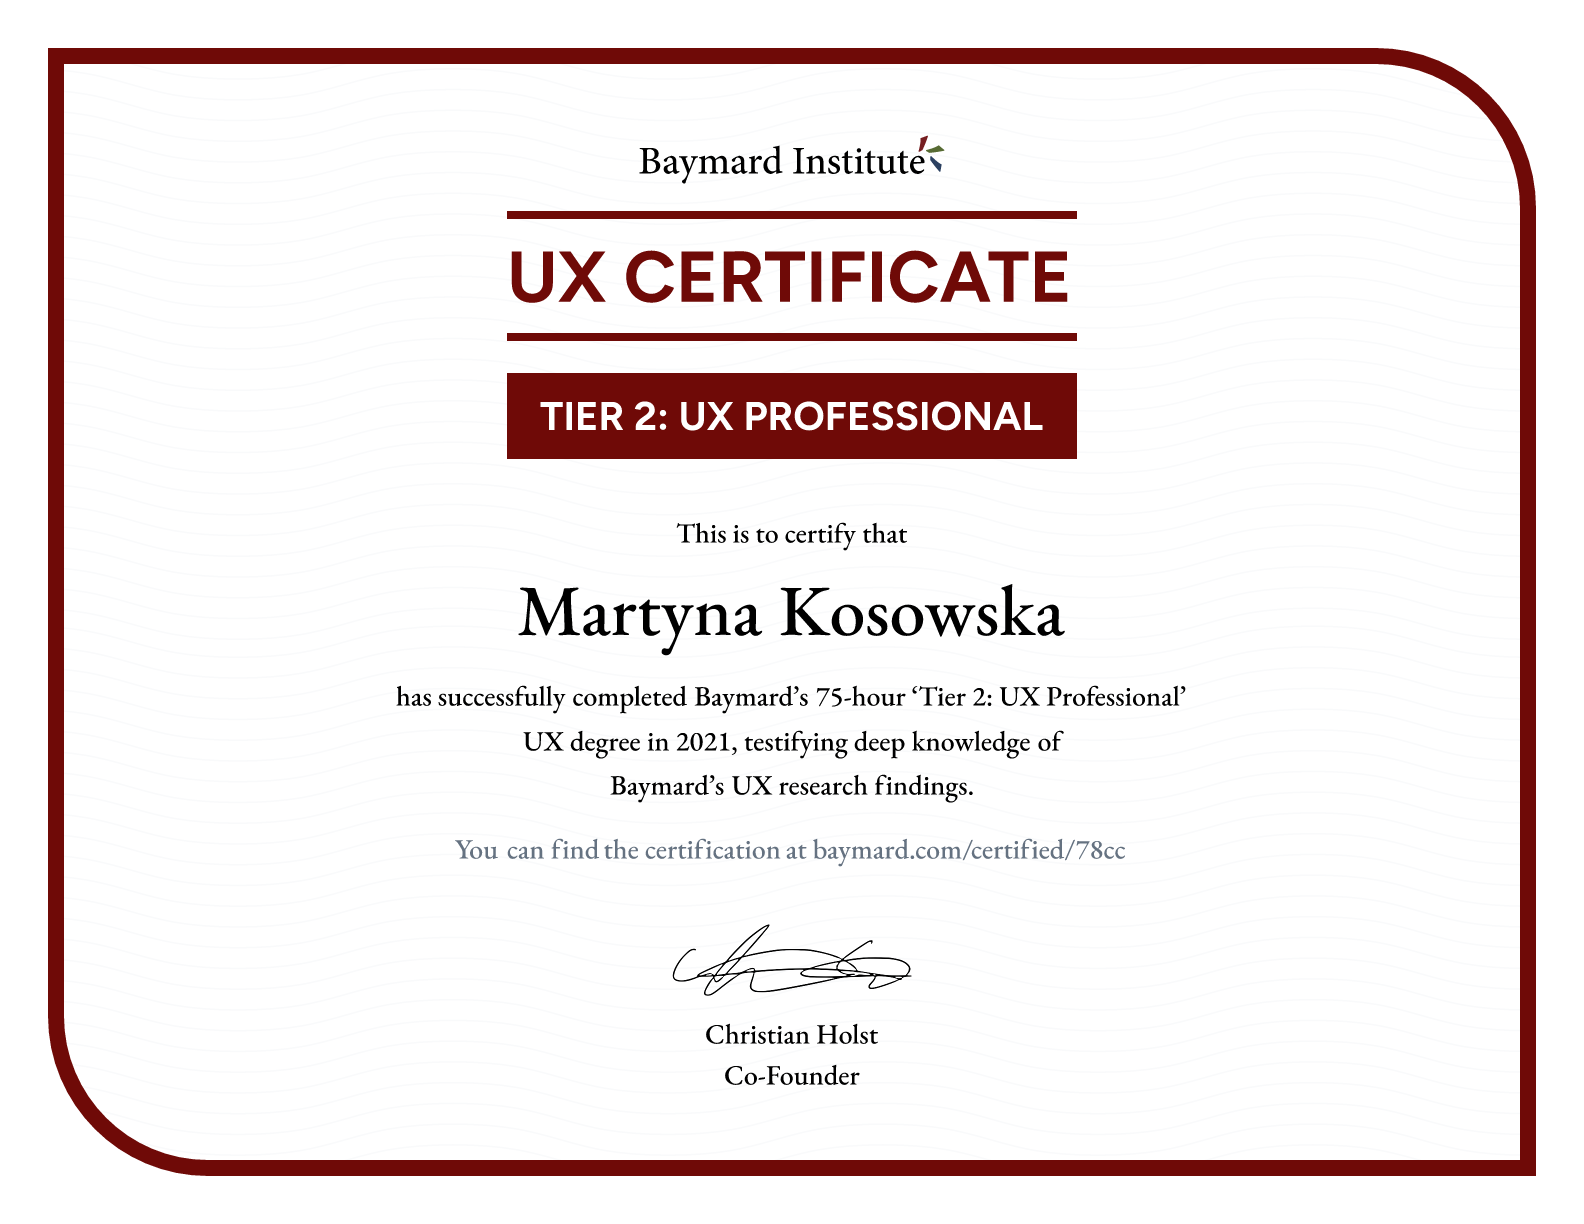 Martyna Kosowska’s certificate